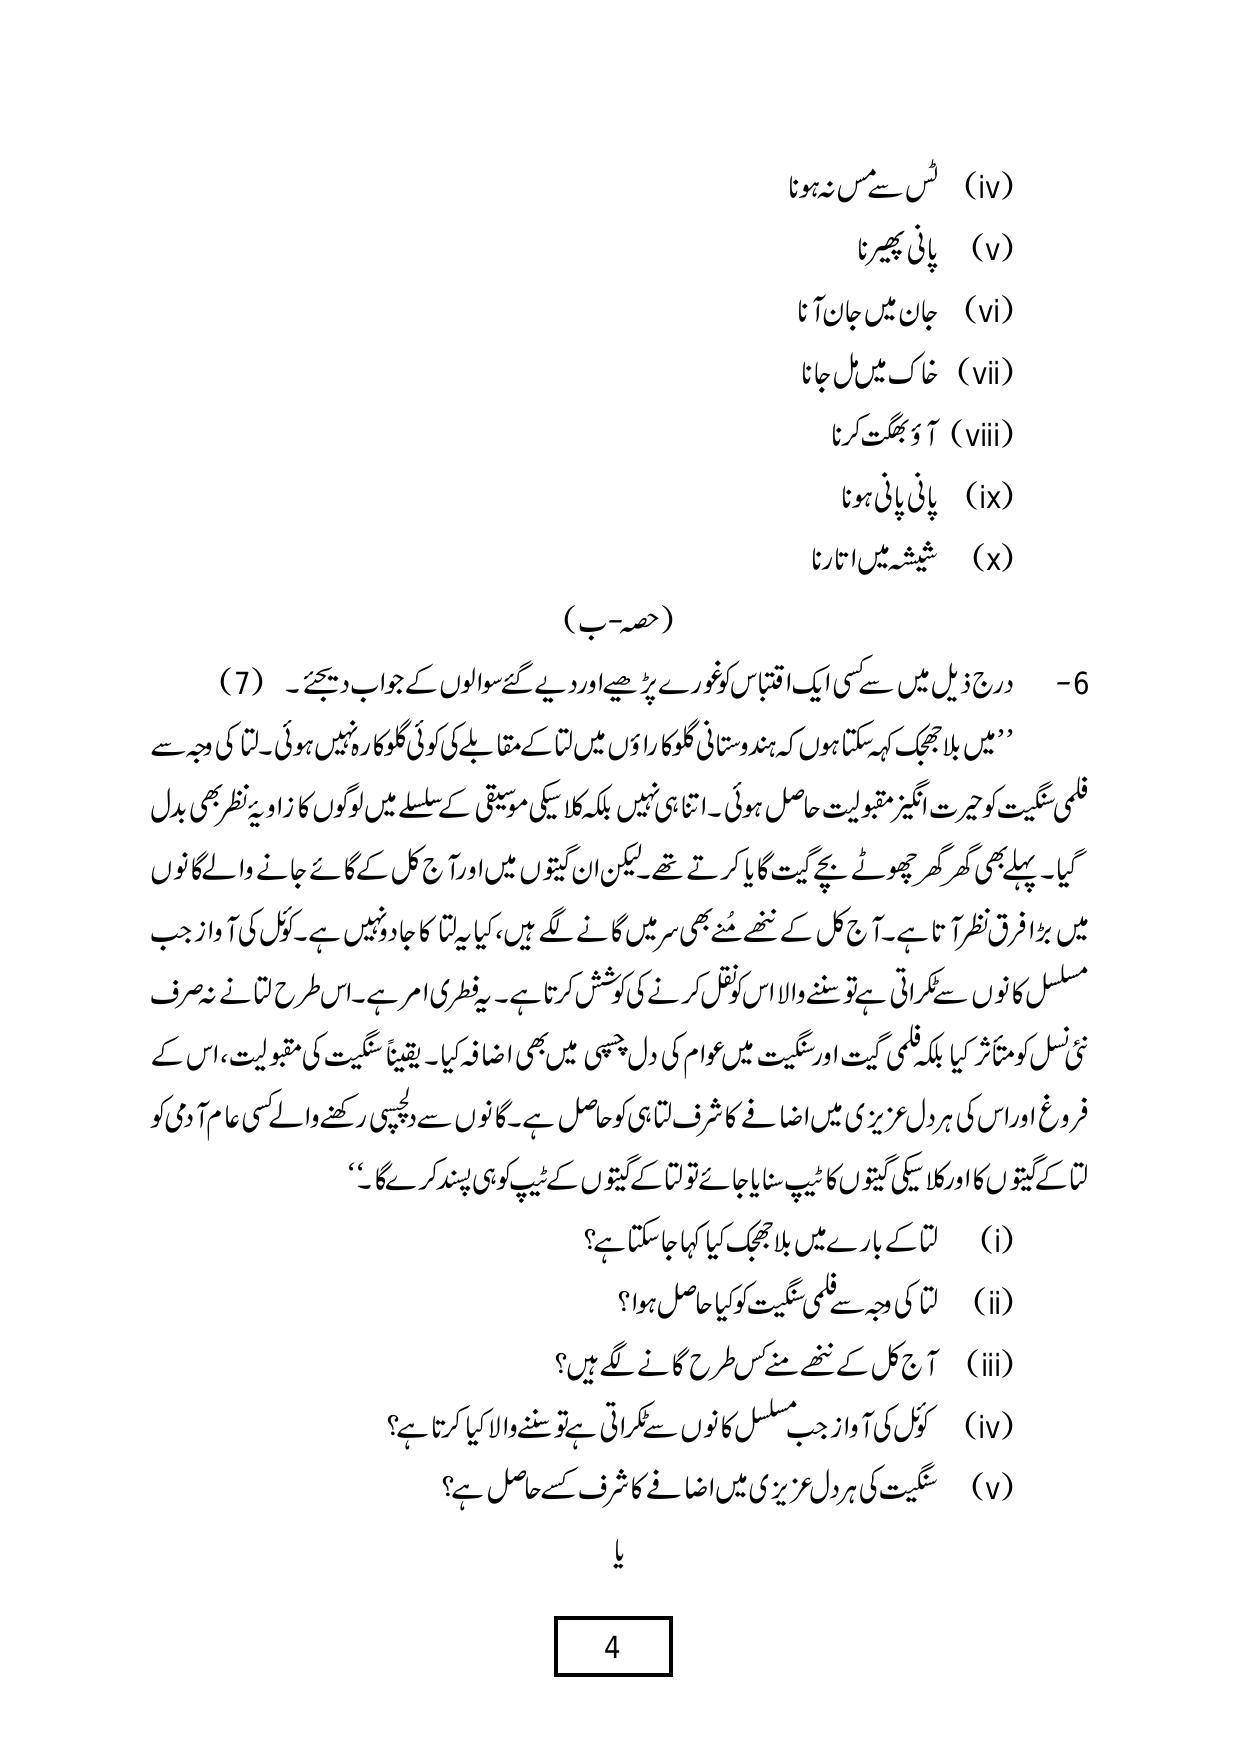 CBSE Class 12 Urdu Core -Sample Paper 2019-20 - Page 4